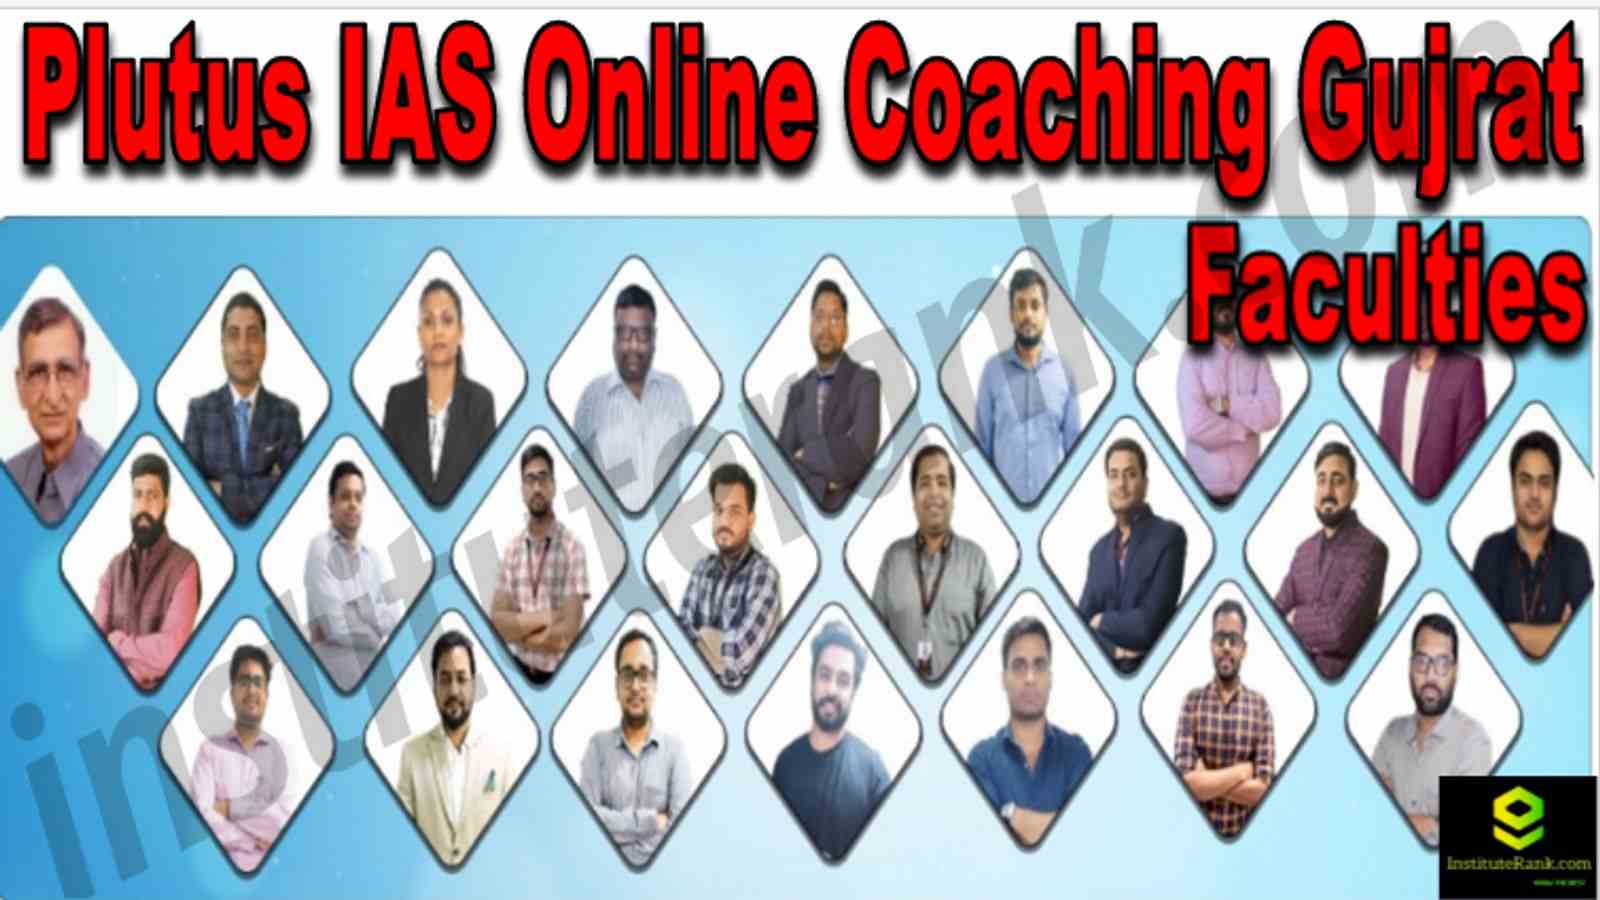 Plutus IAS Online Coaching Gujrat Reviews Faculties